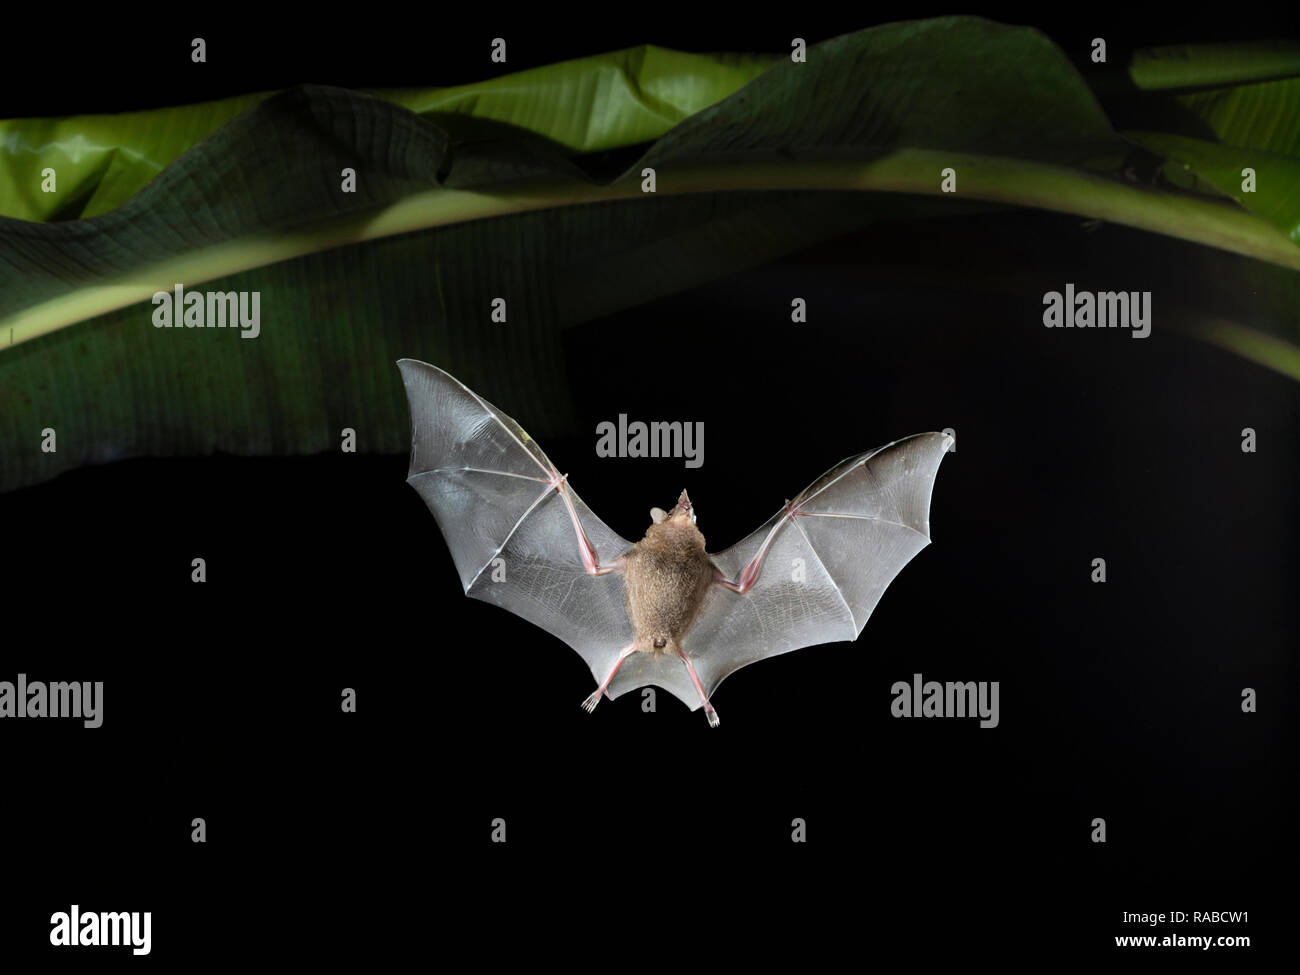 Seba's short-tailed fruit bat (Carollia perspicillata) flying at night in banana plantation, Puntarenas, Costa Rica Stock Photo